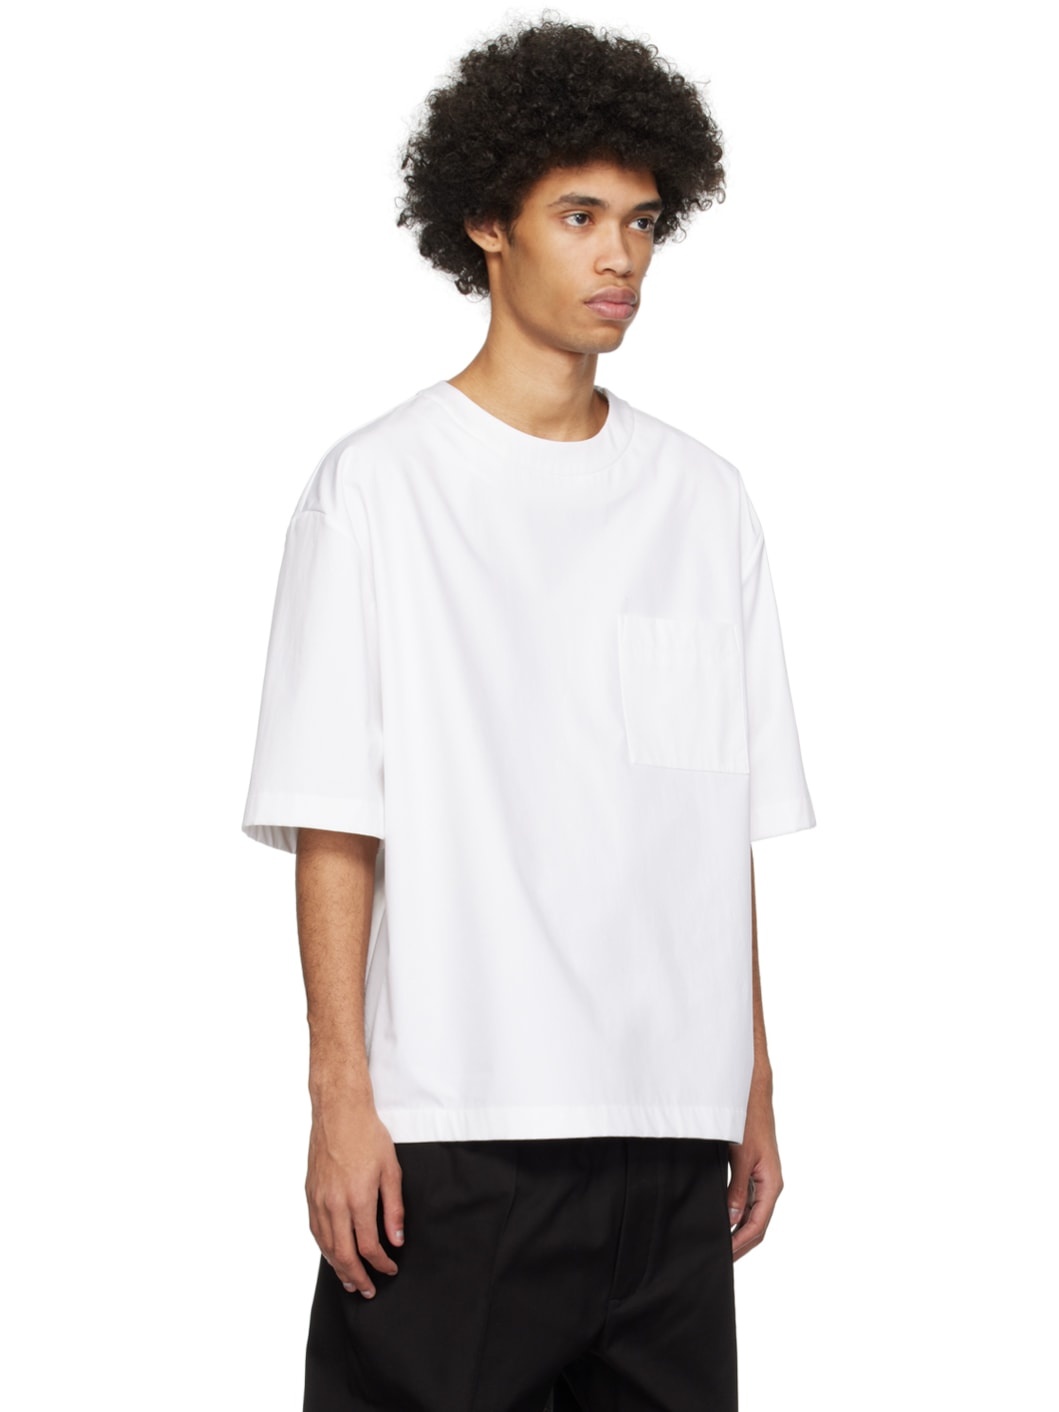 White Pocket T-Shirt - 2